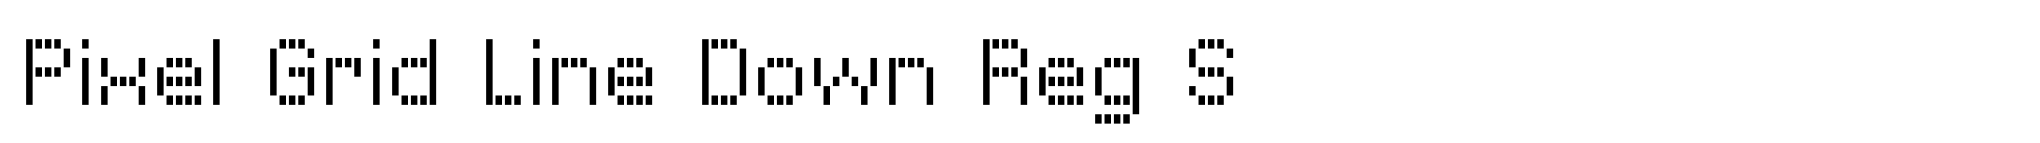 Pixel Grid Line Down Reg S image